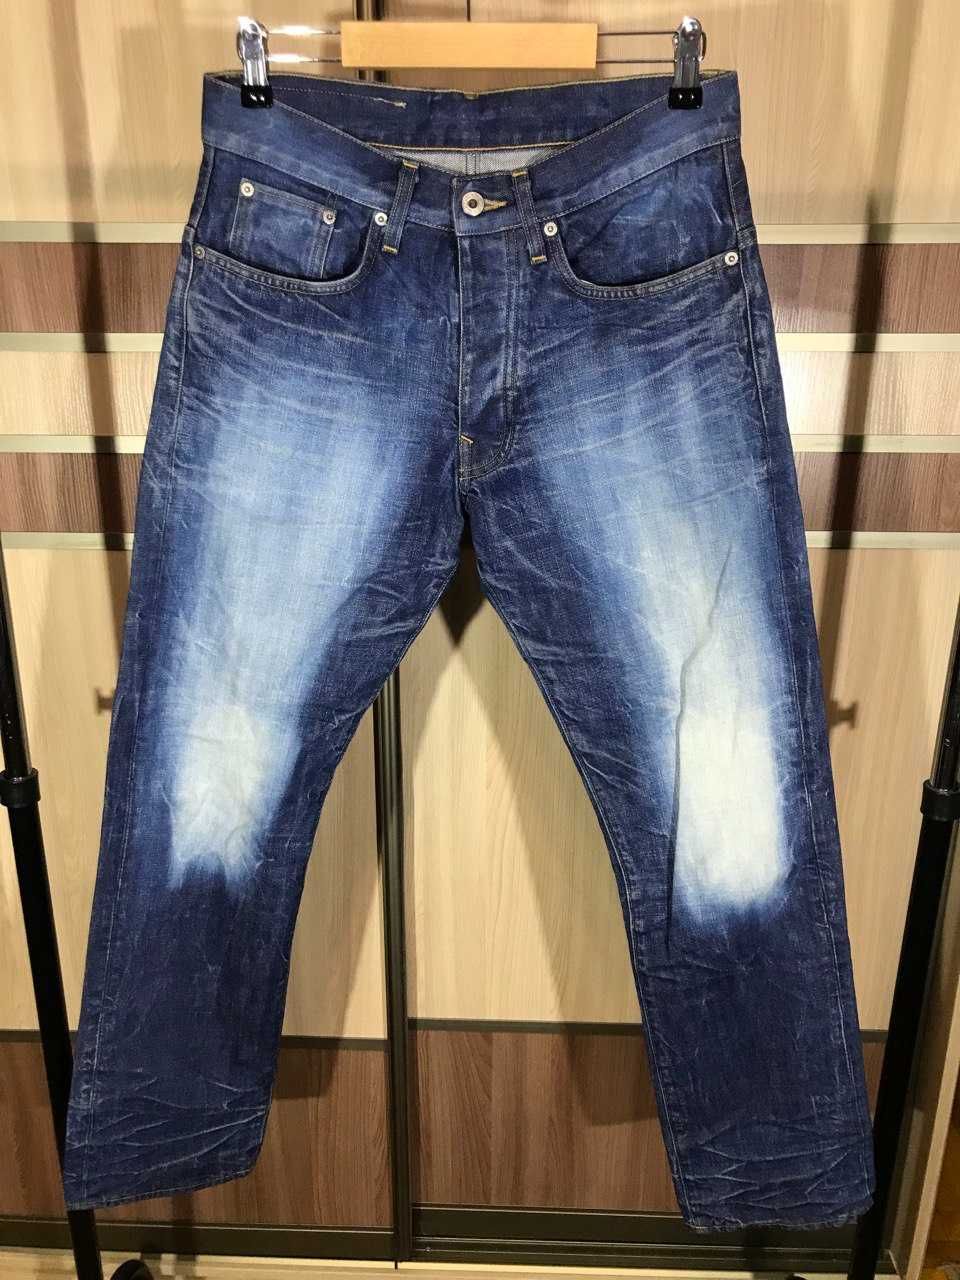 Мужские джинсы штаны Vintage G-Star Raw Faded  Size 30/32 оригинал